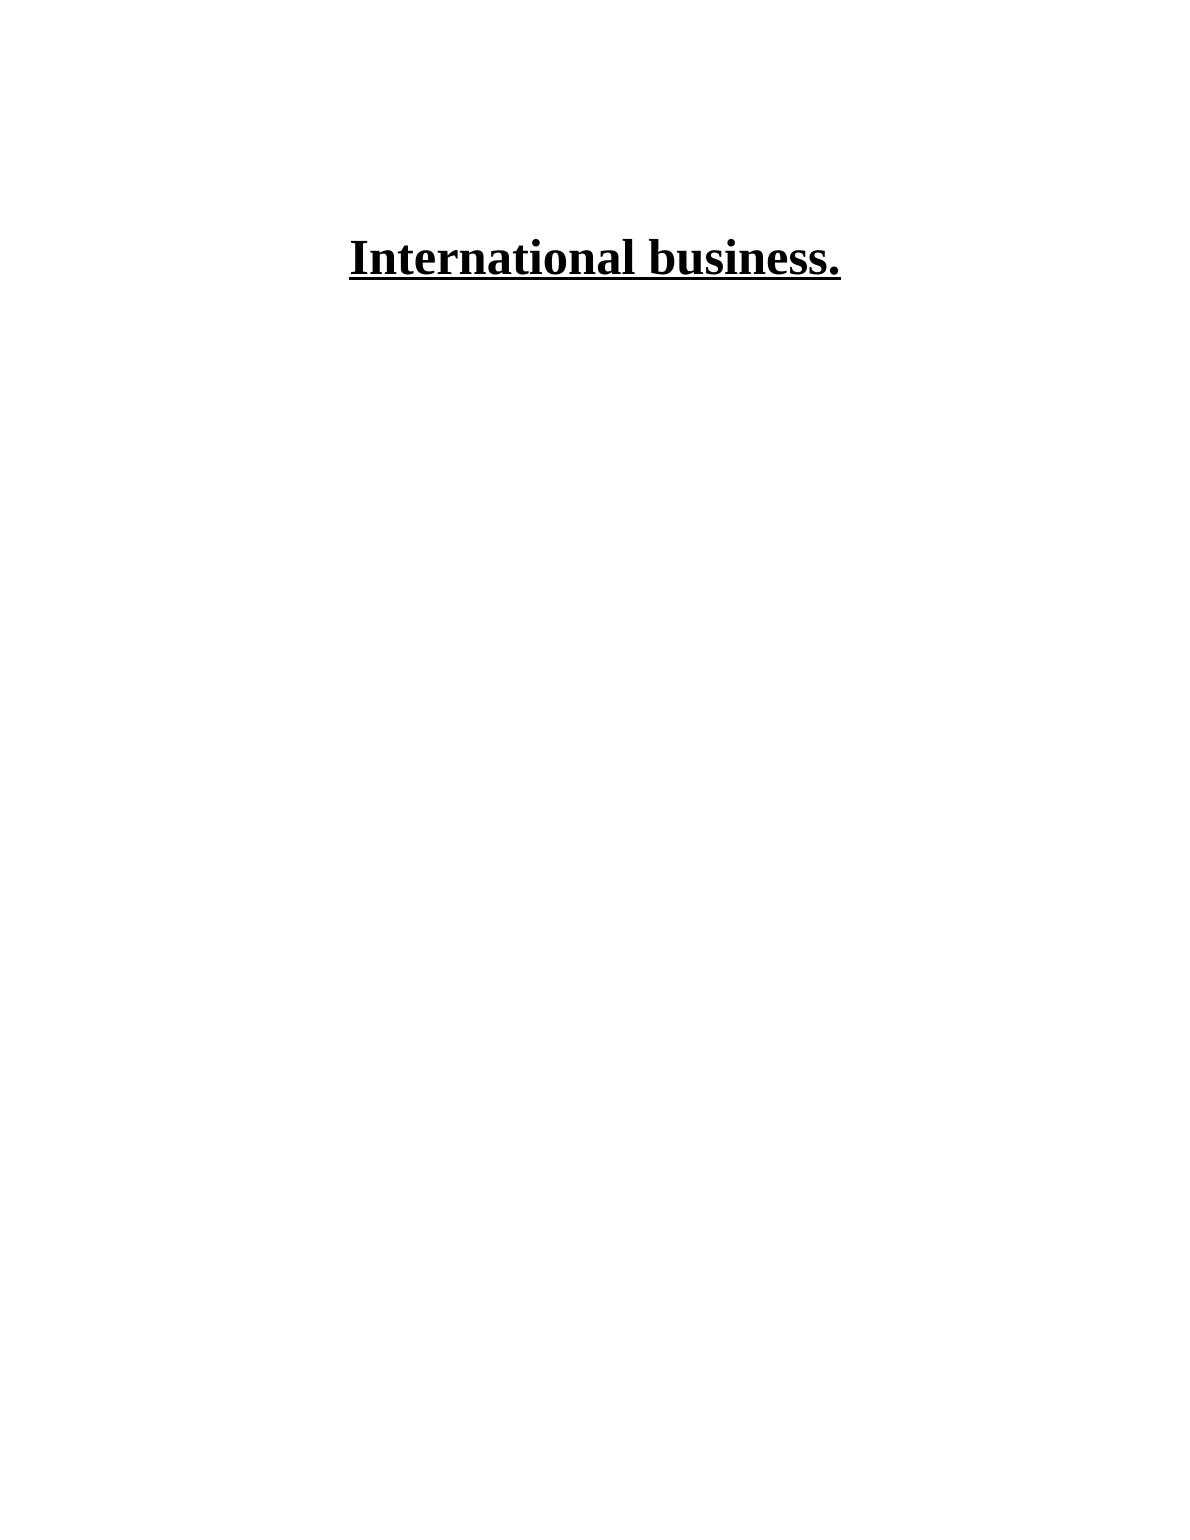 International Business: Factors Influencing Growth and Development_1